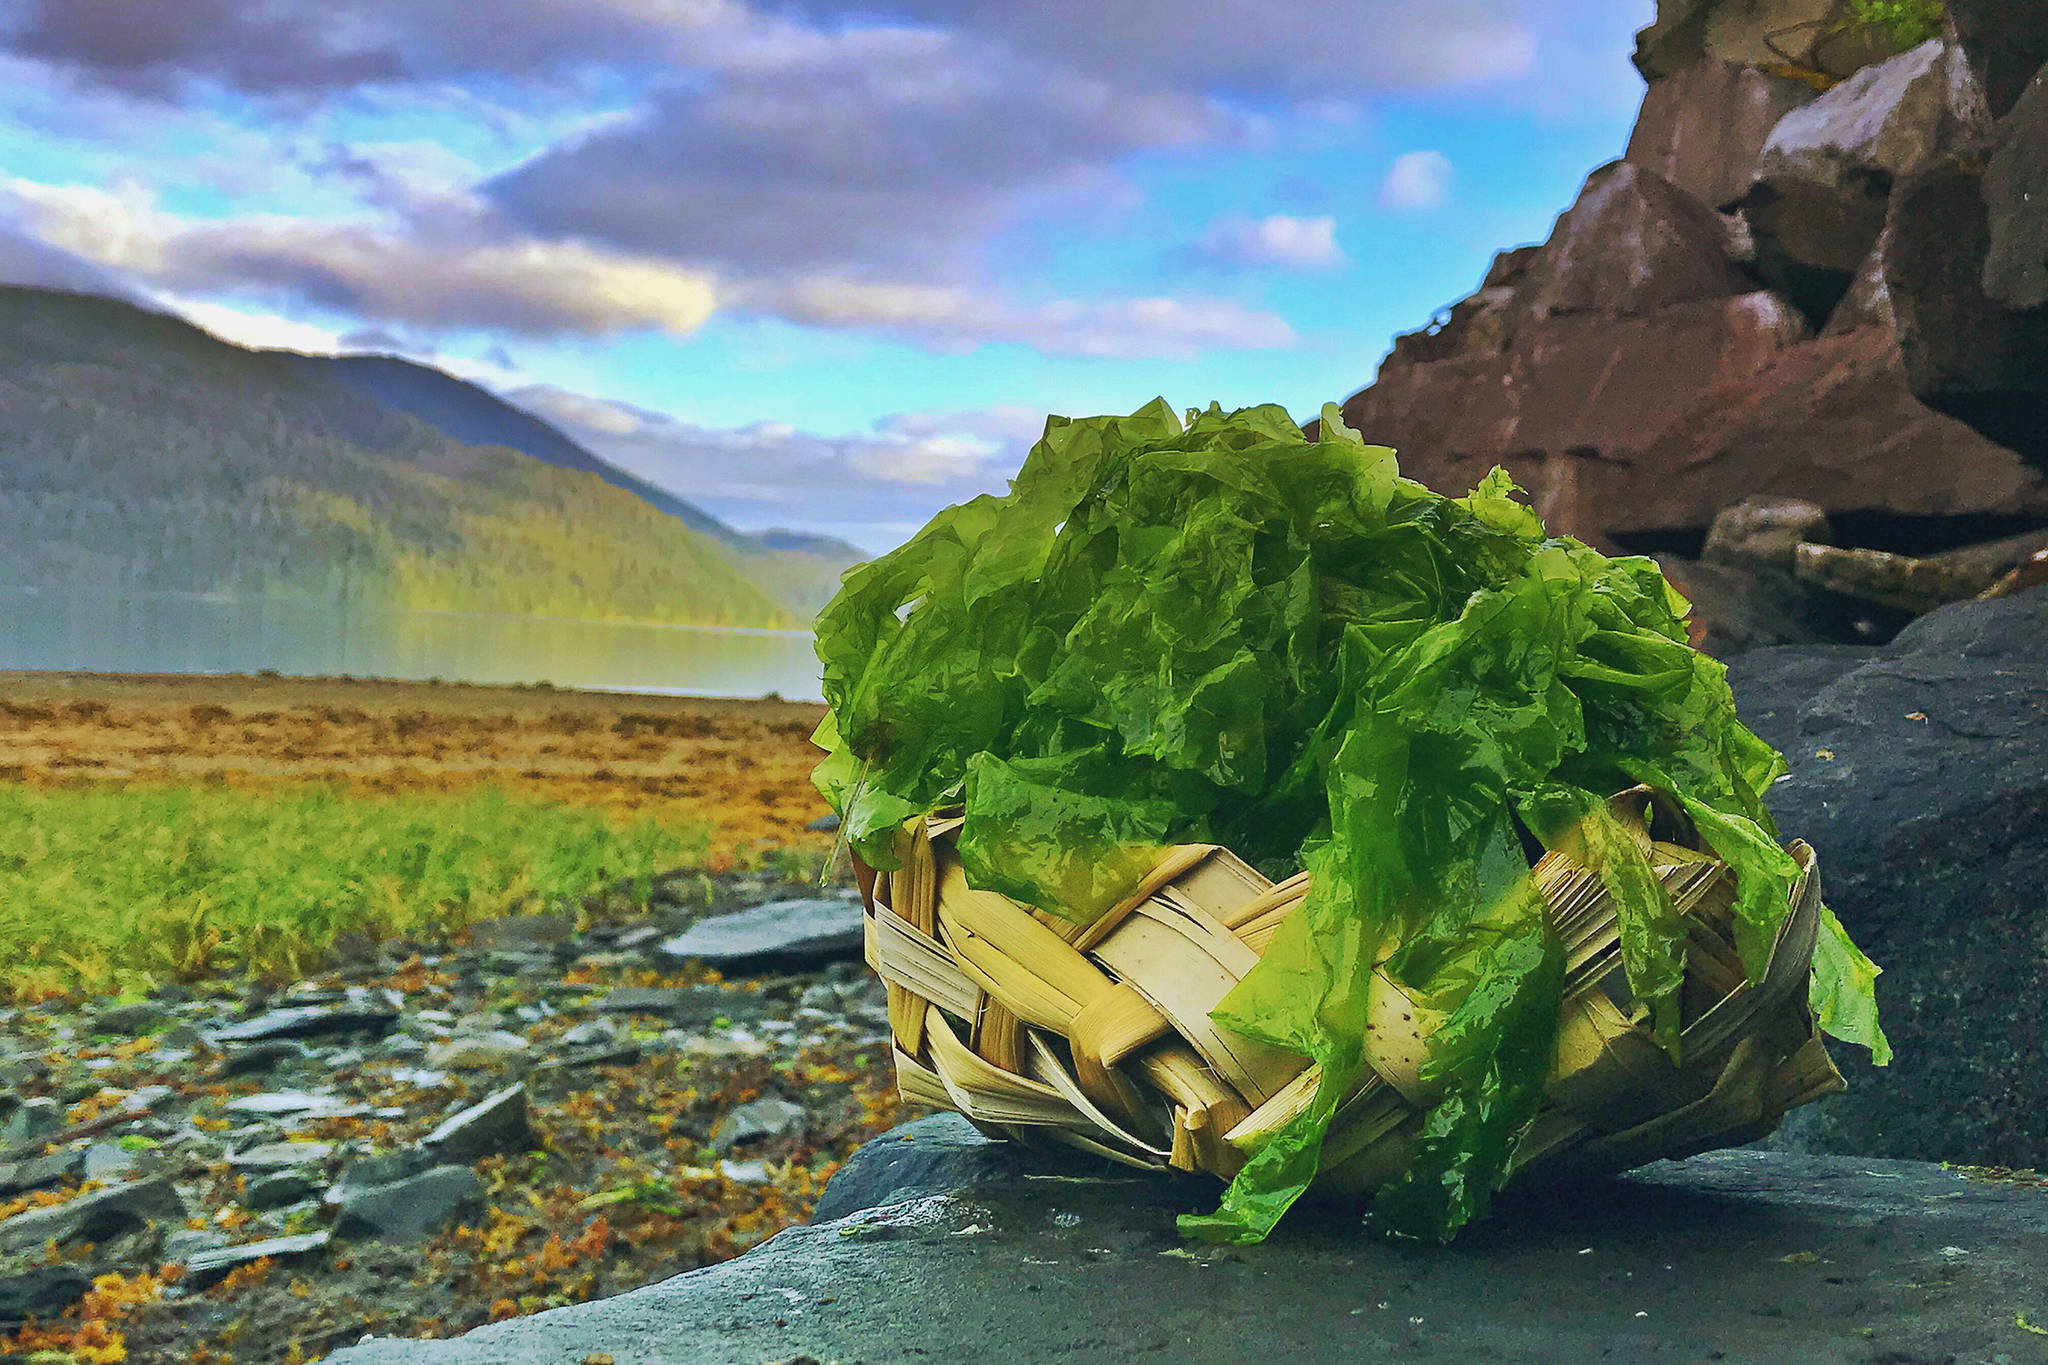 Sea lettuce: The treat beneath your feet